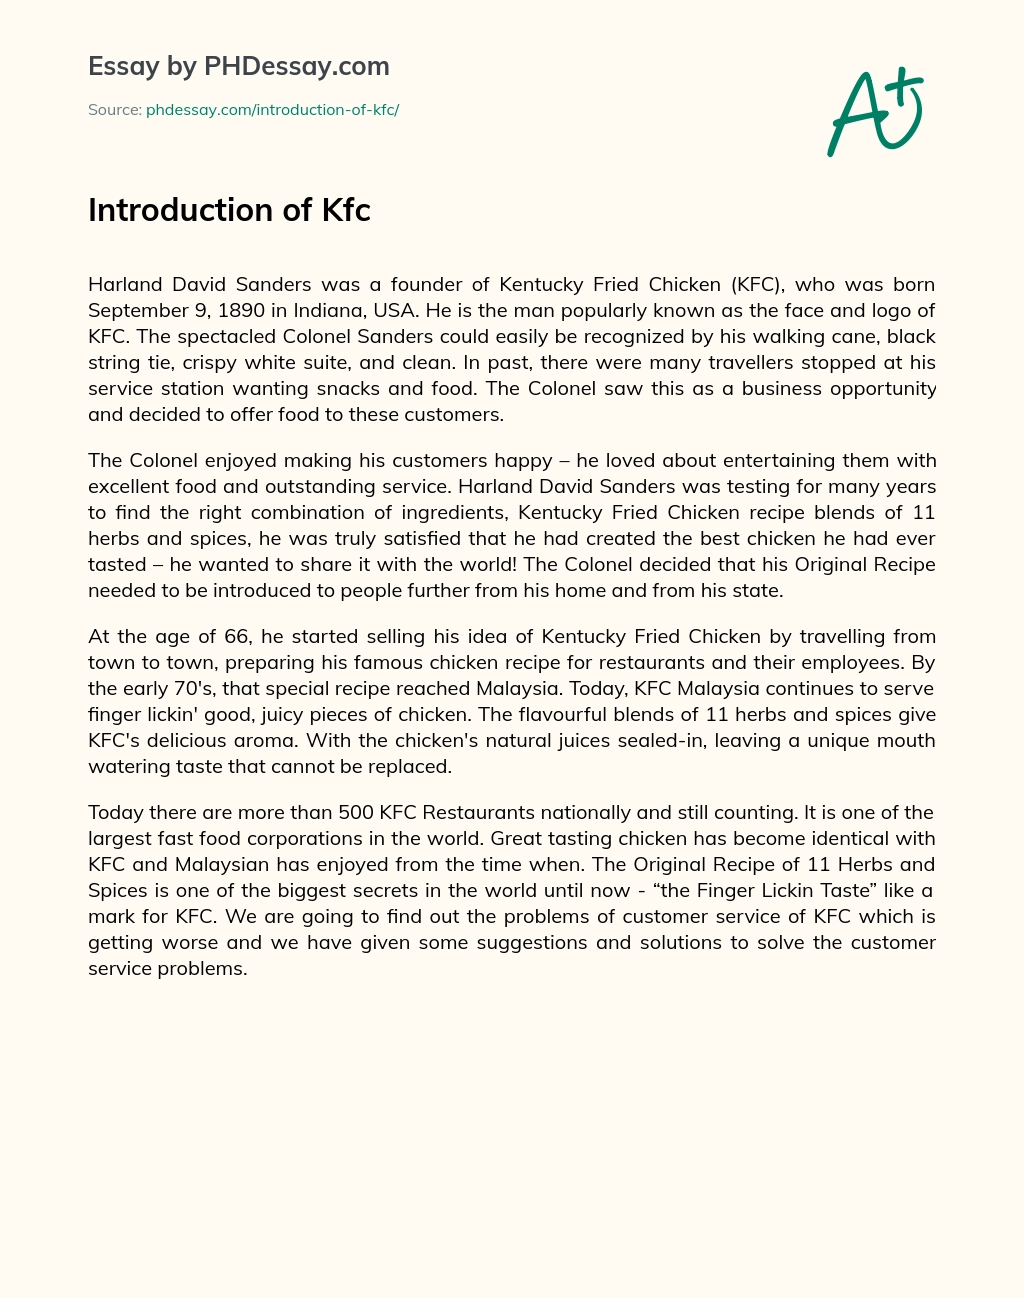 Introduction of Kfc essay